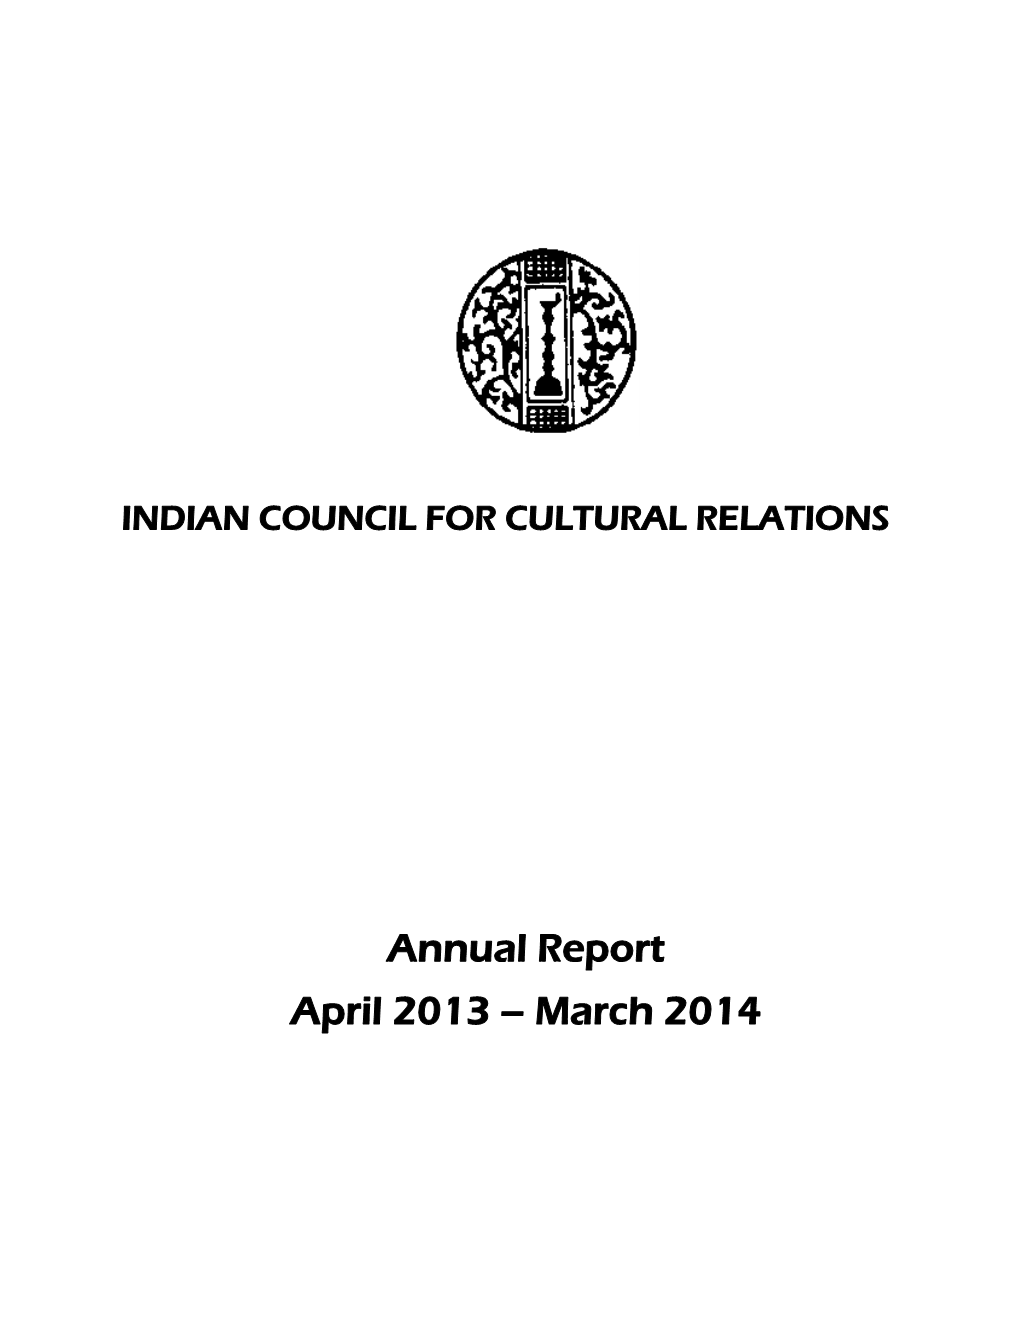 Annual Report April 2013 – March 2014 Contents